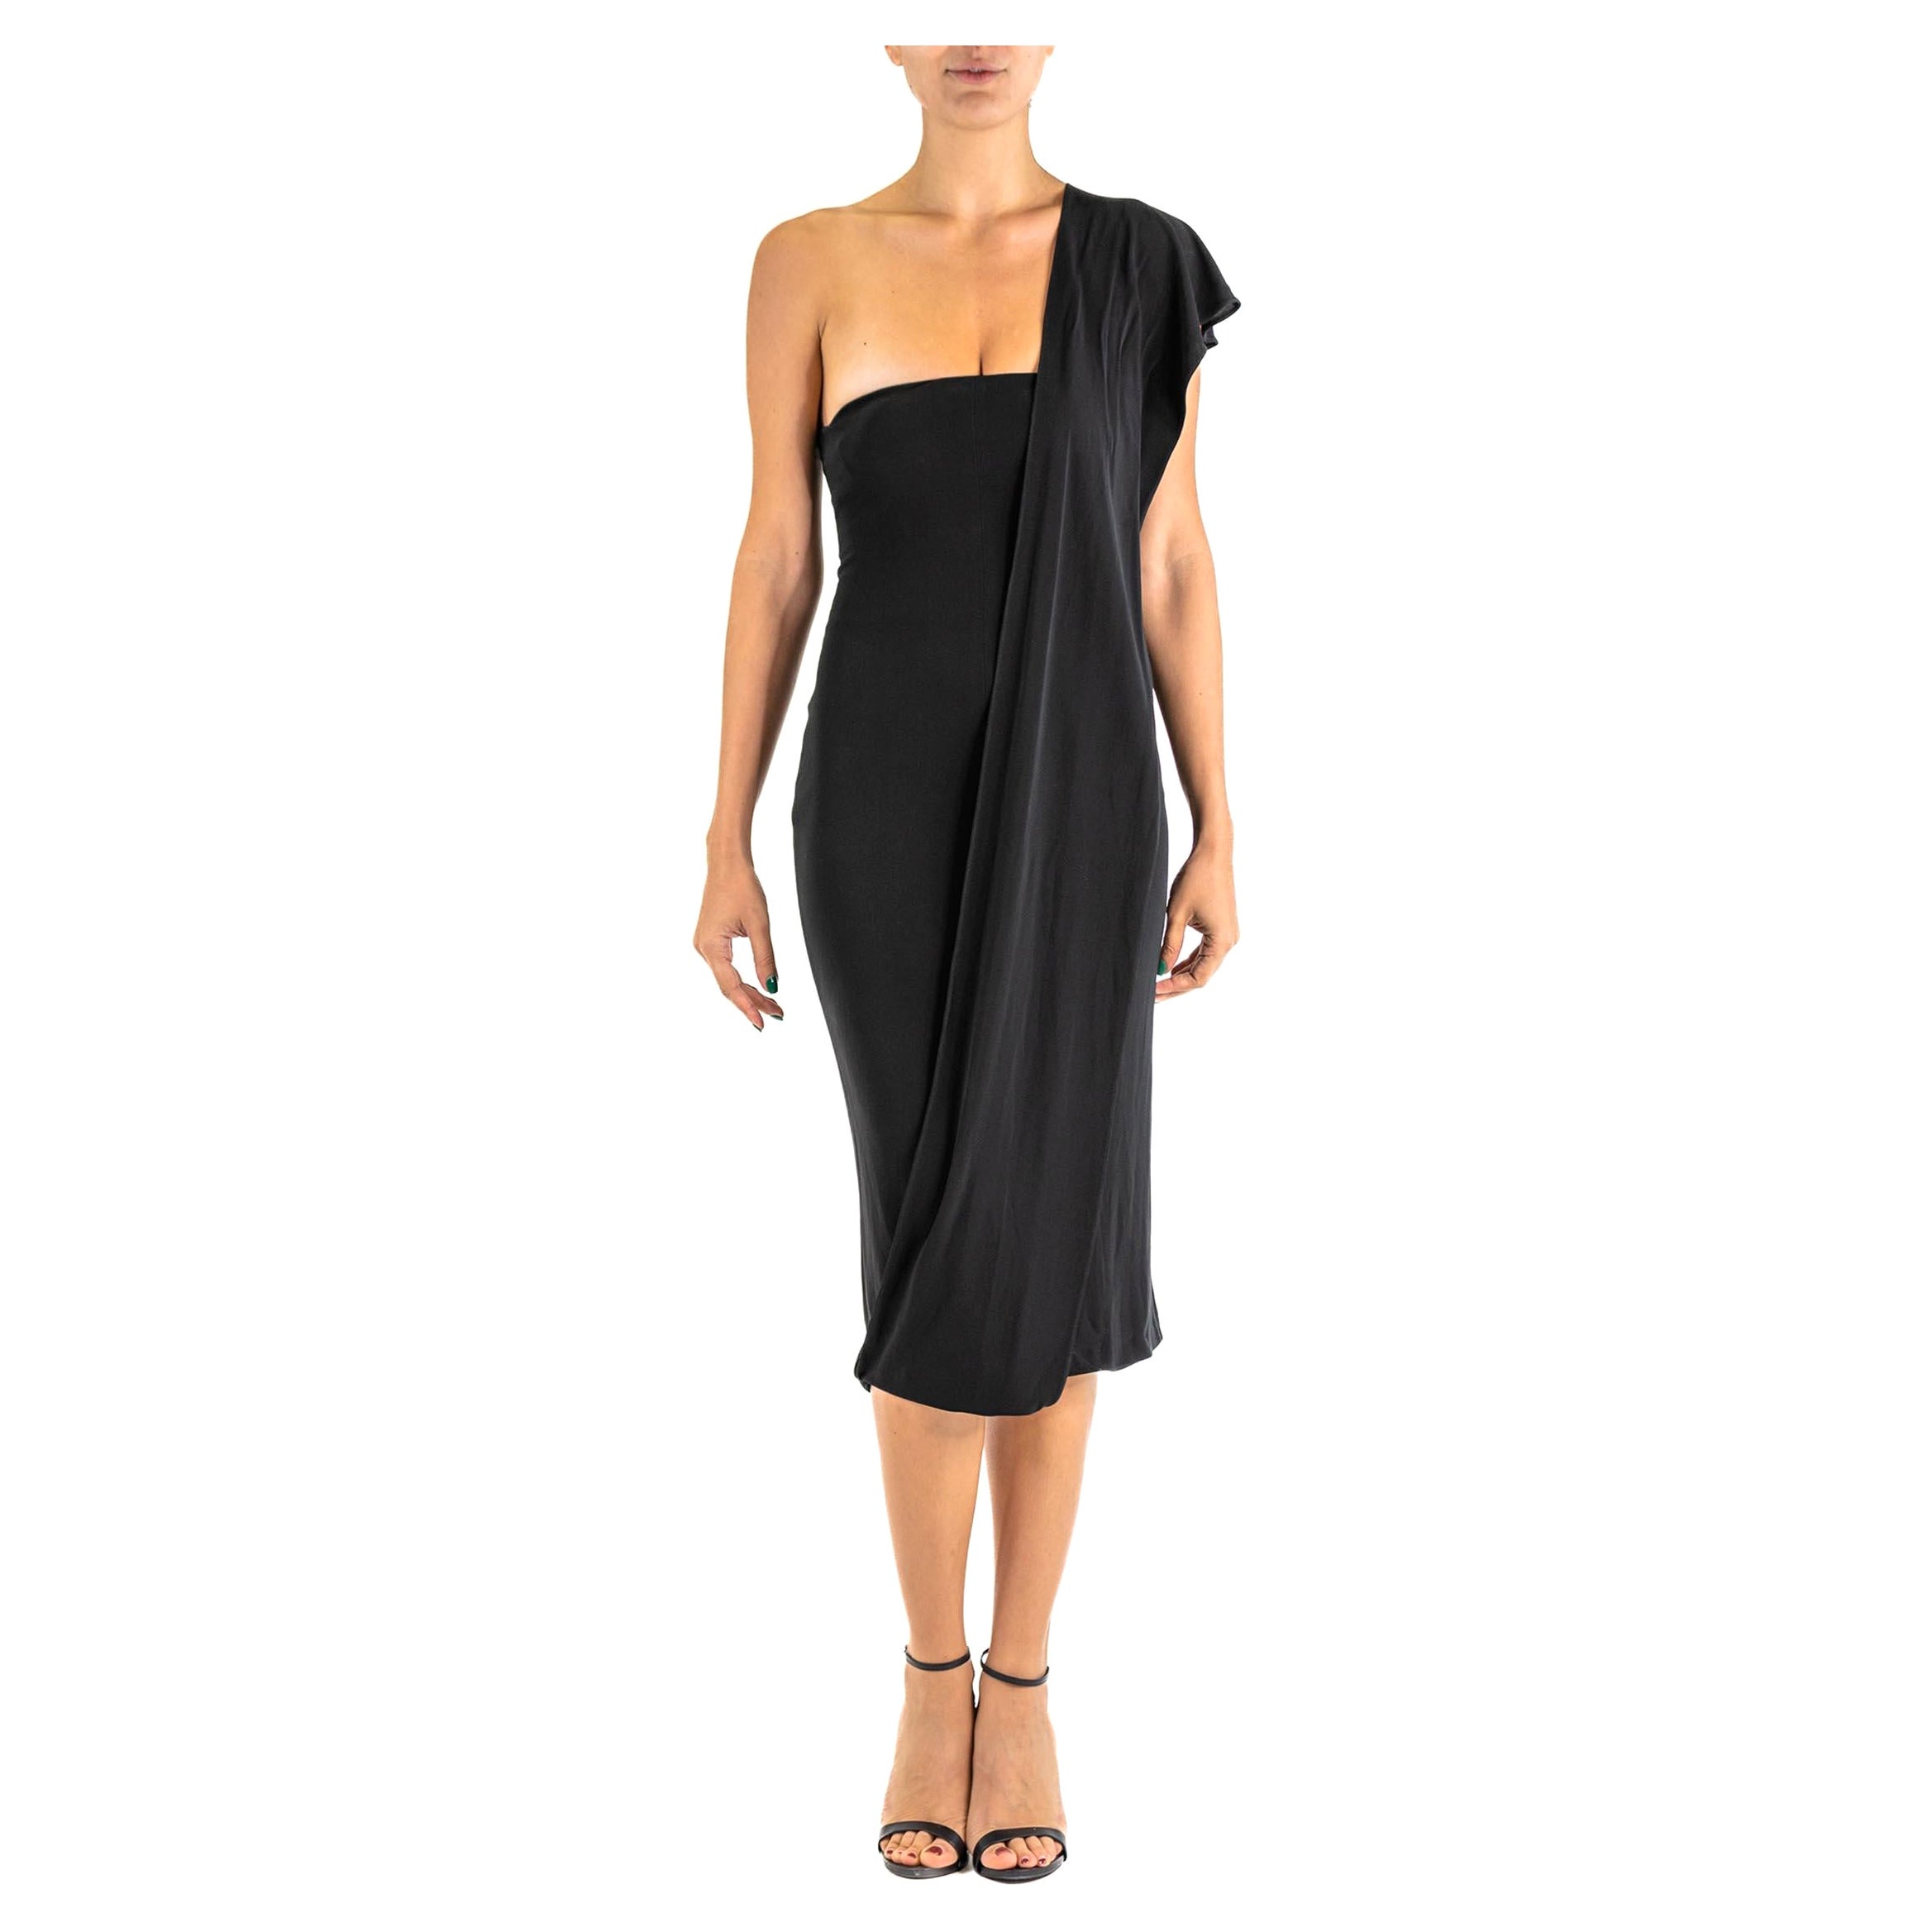 1990S HERVE LEGER Black Rayon Blend Strapless Dress With One Shoulder Sash For Sale